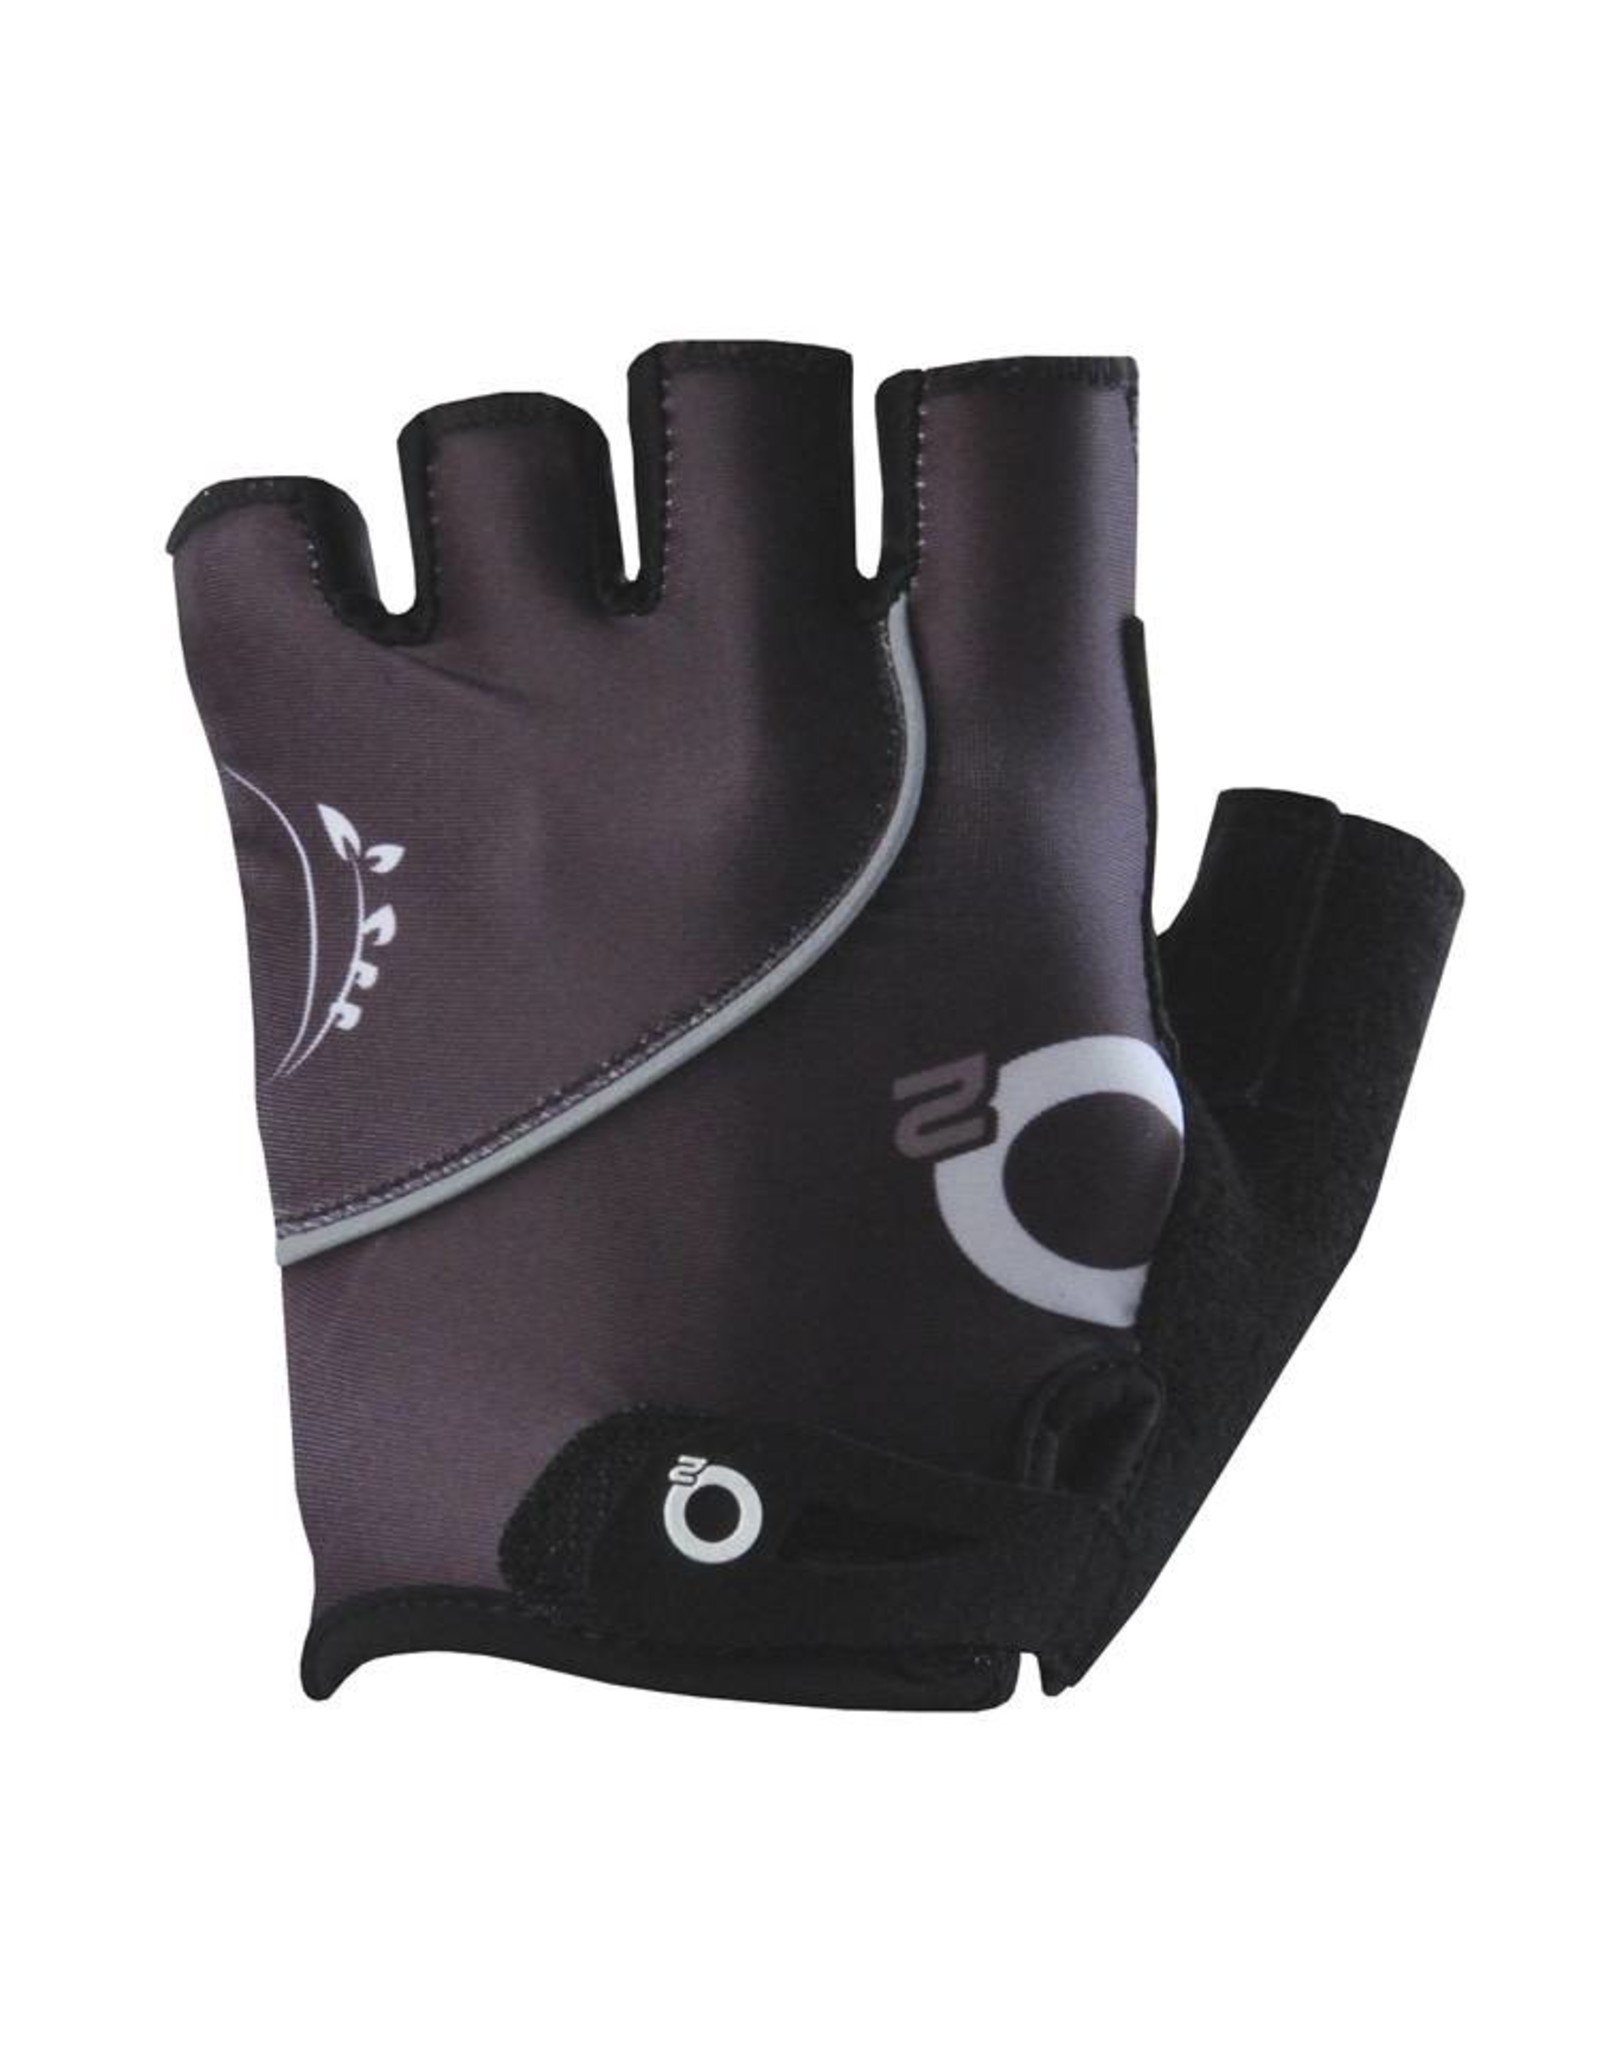 O2 02 Attack Gel Comp womans glove